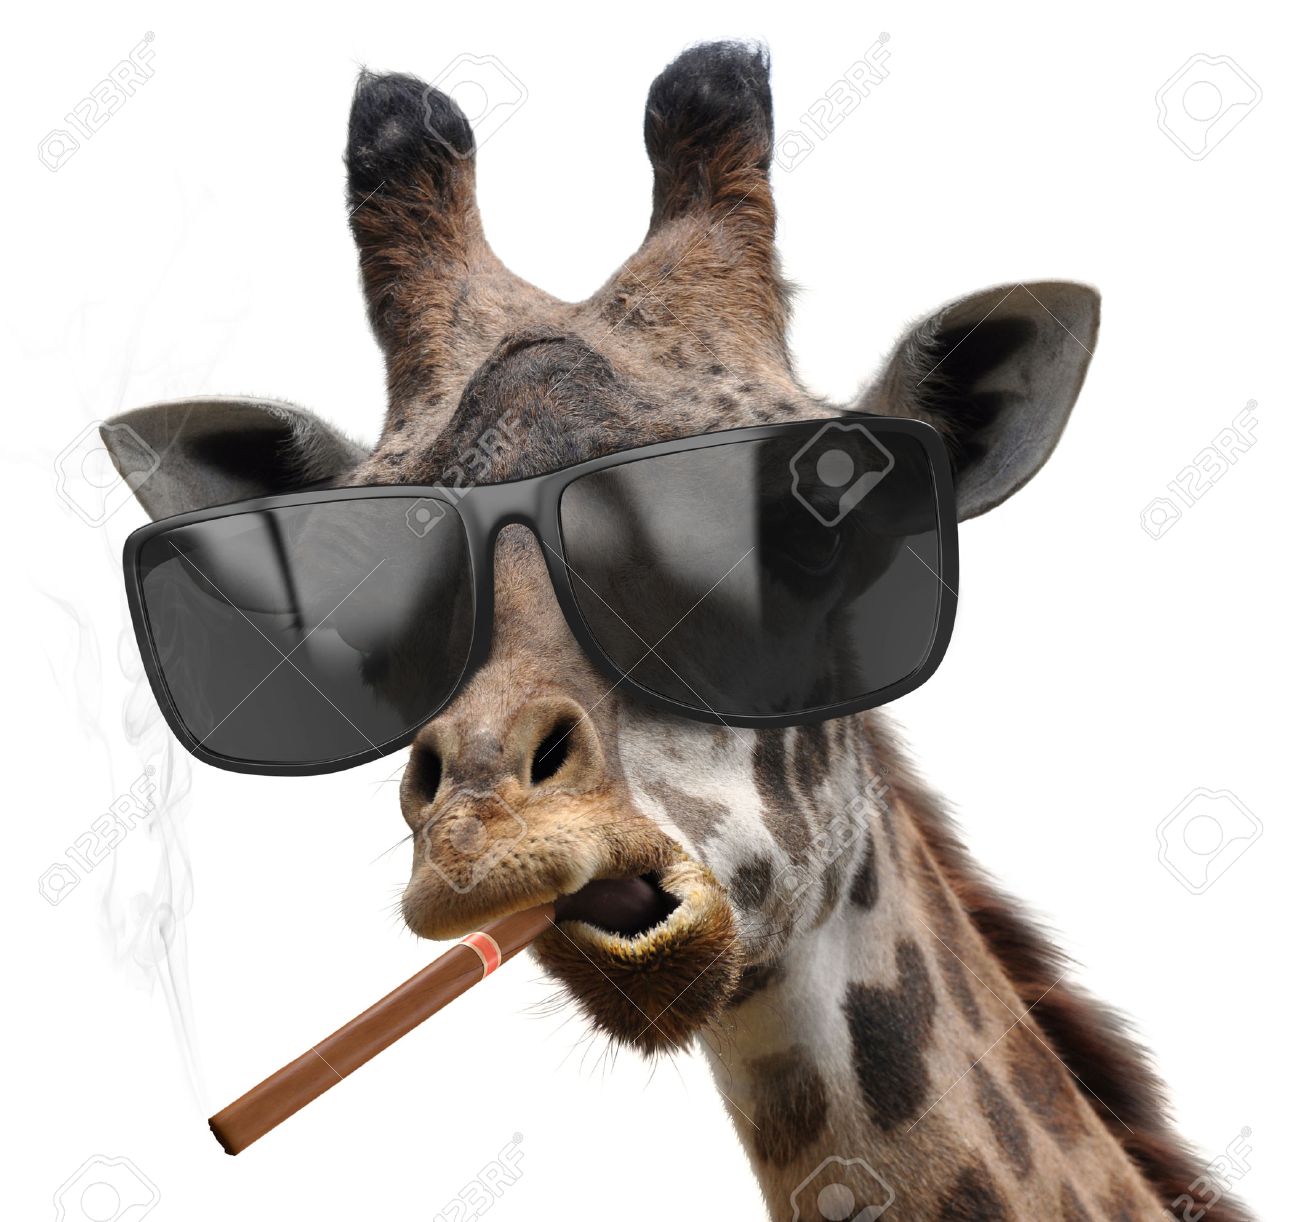 37345947-Macho-giraffe-with-cool-sunglasses-smoking-a-cuban-cigar-like-a-boss-Stock-Photo.jpg